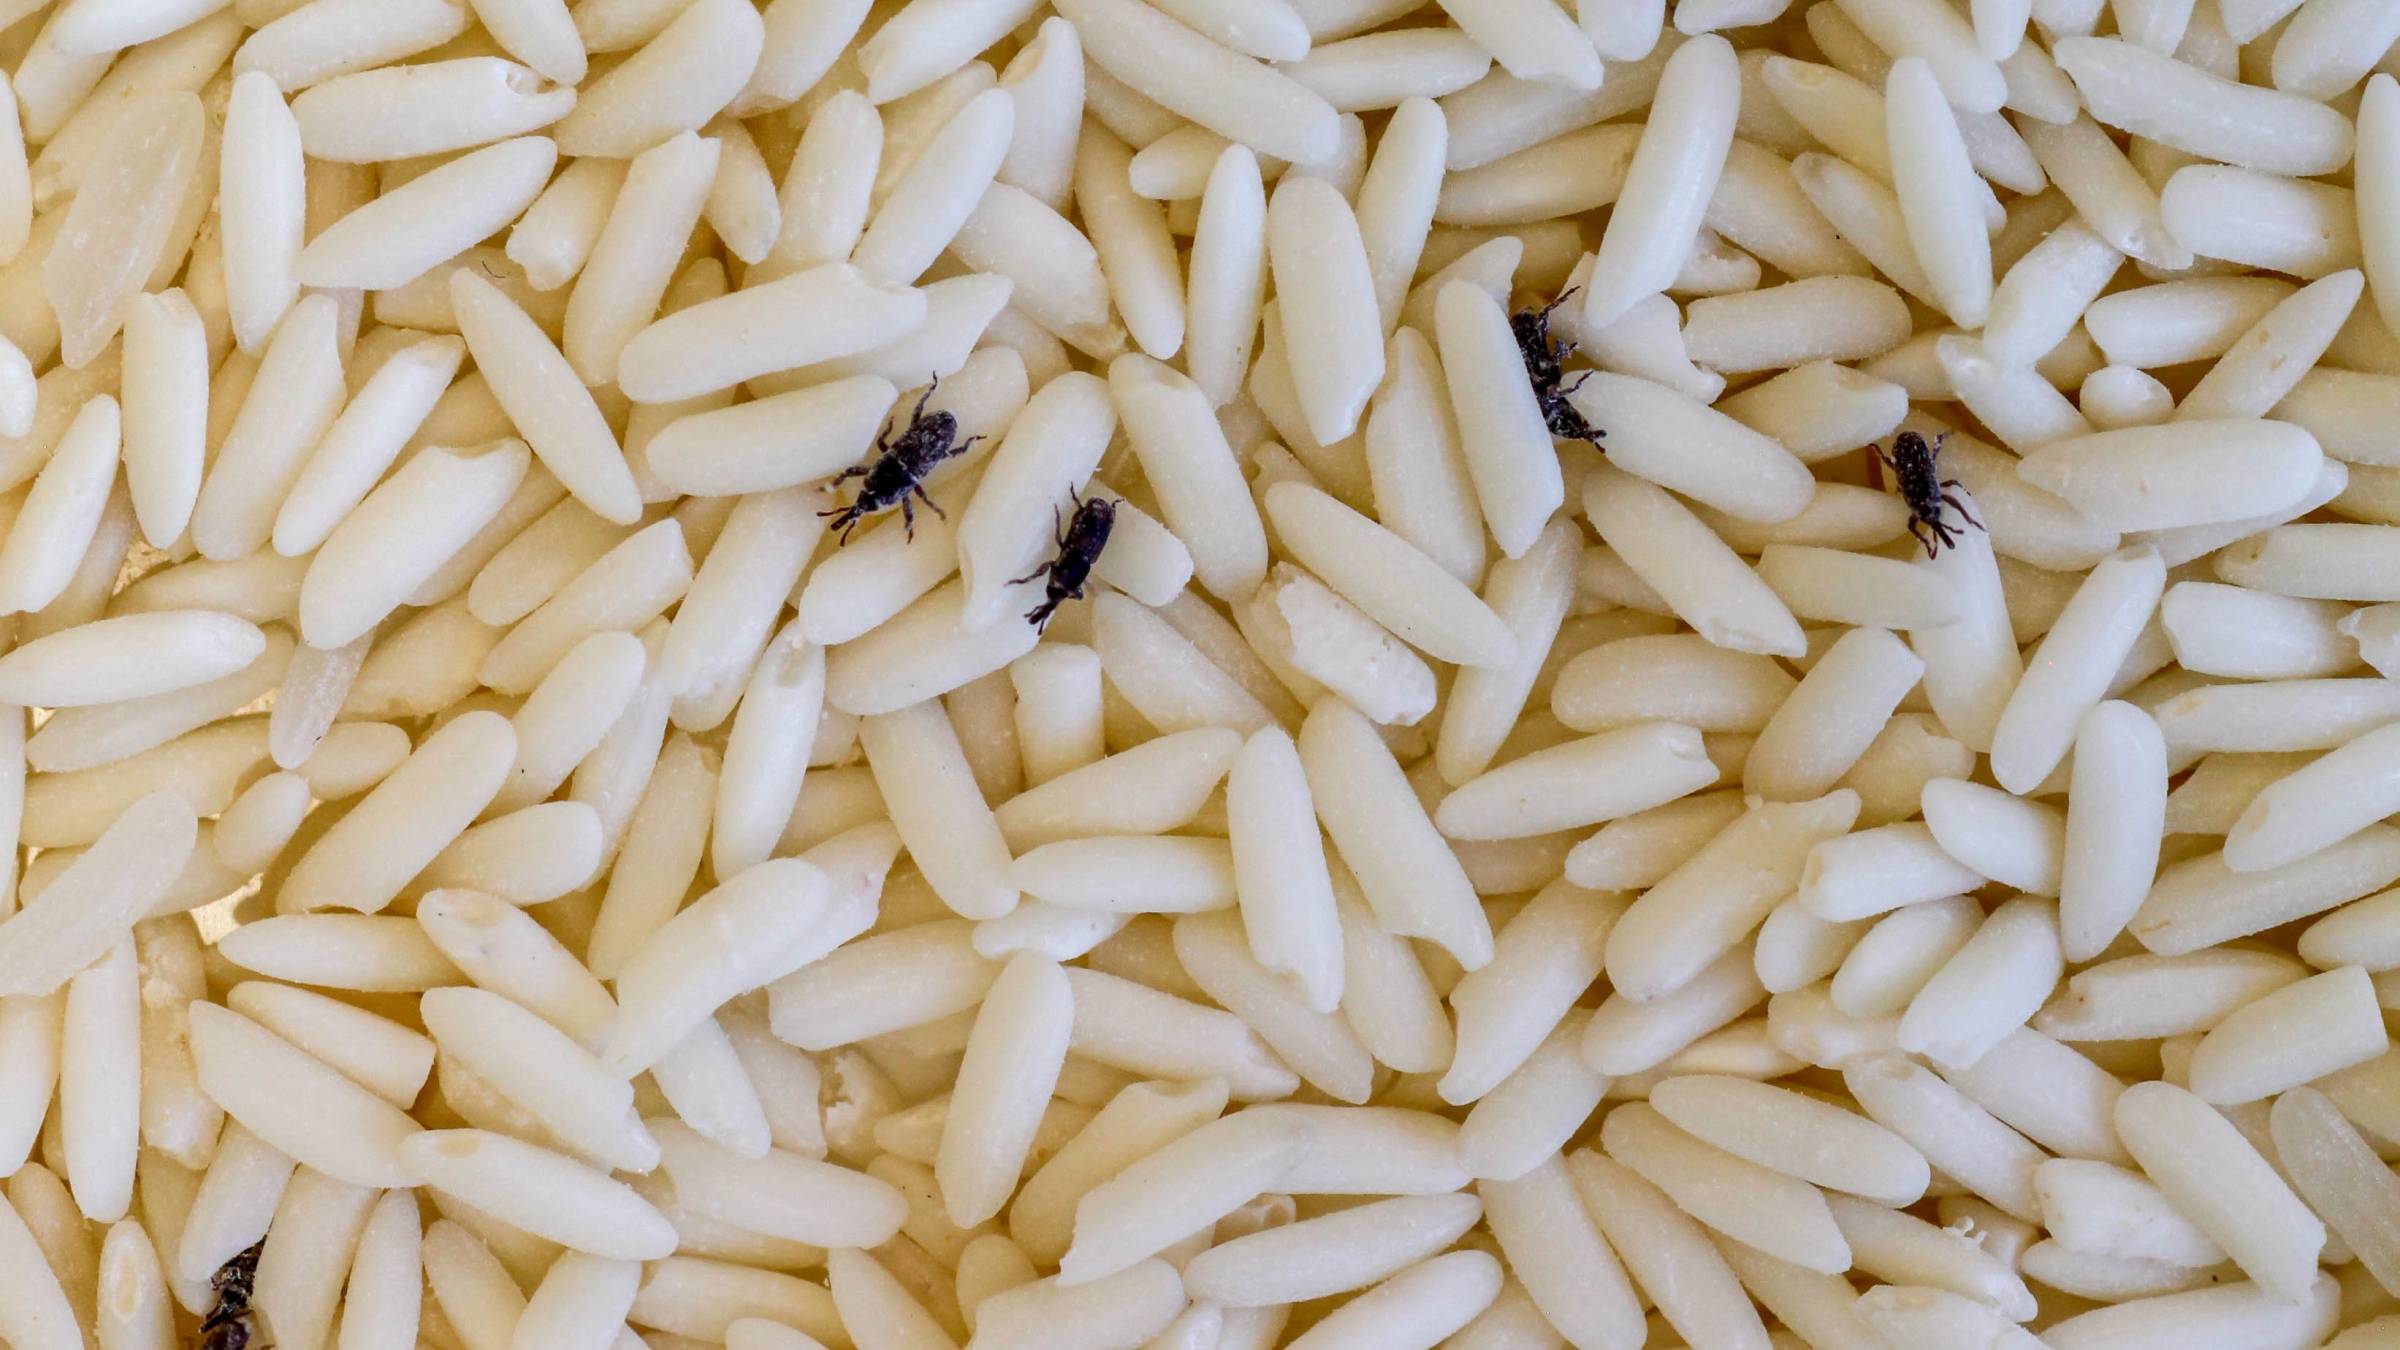 weevils on grains of rice